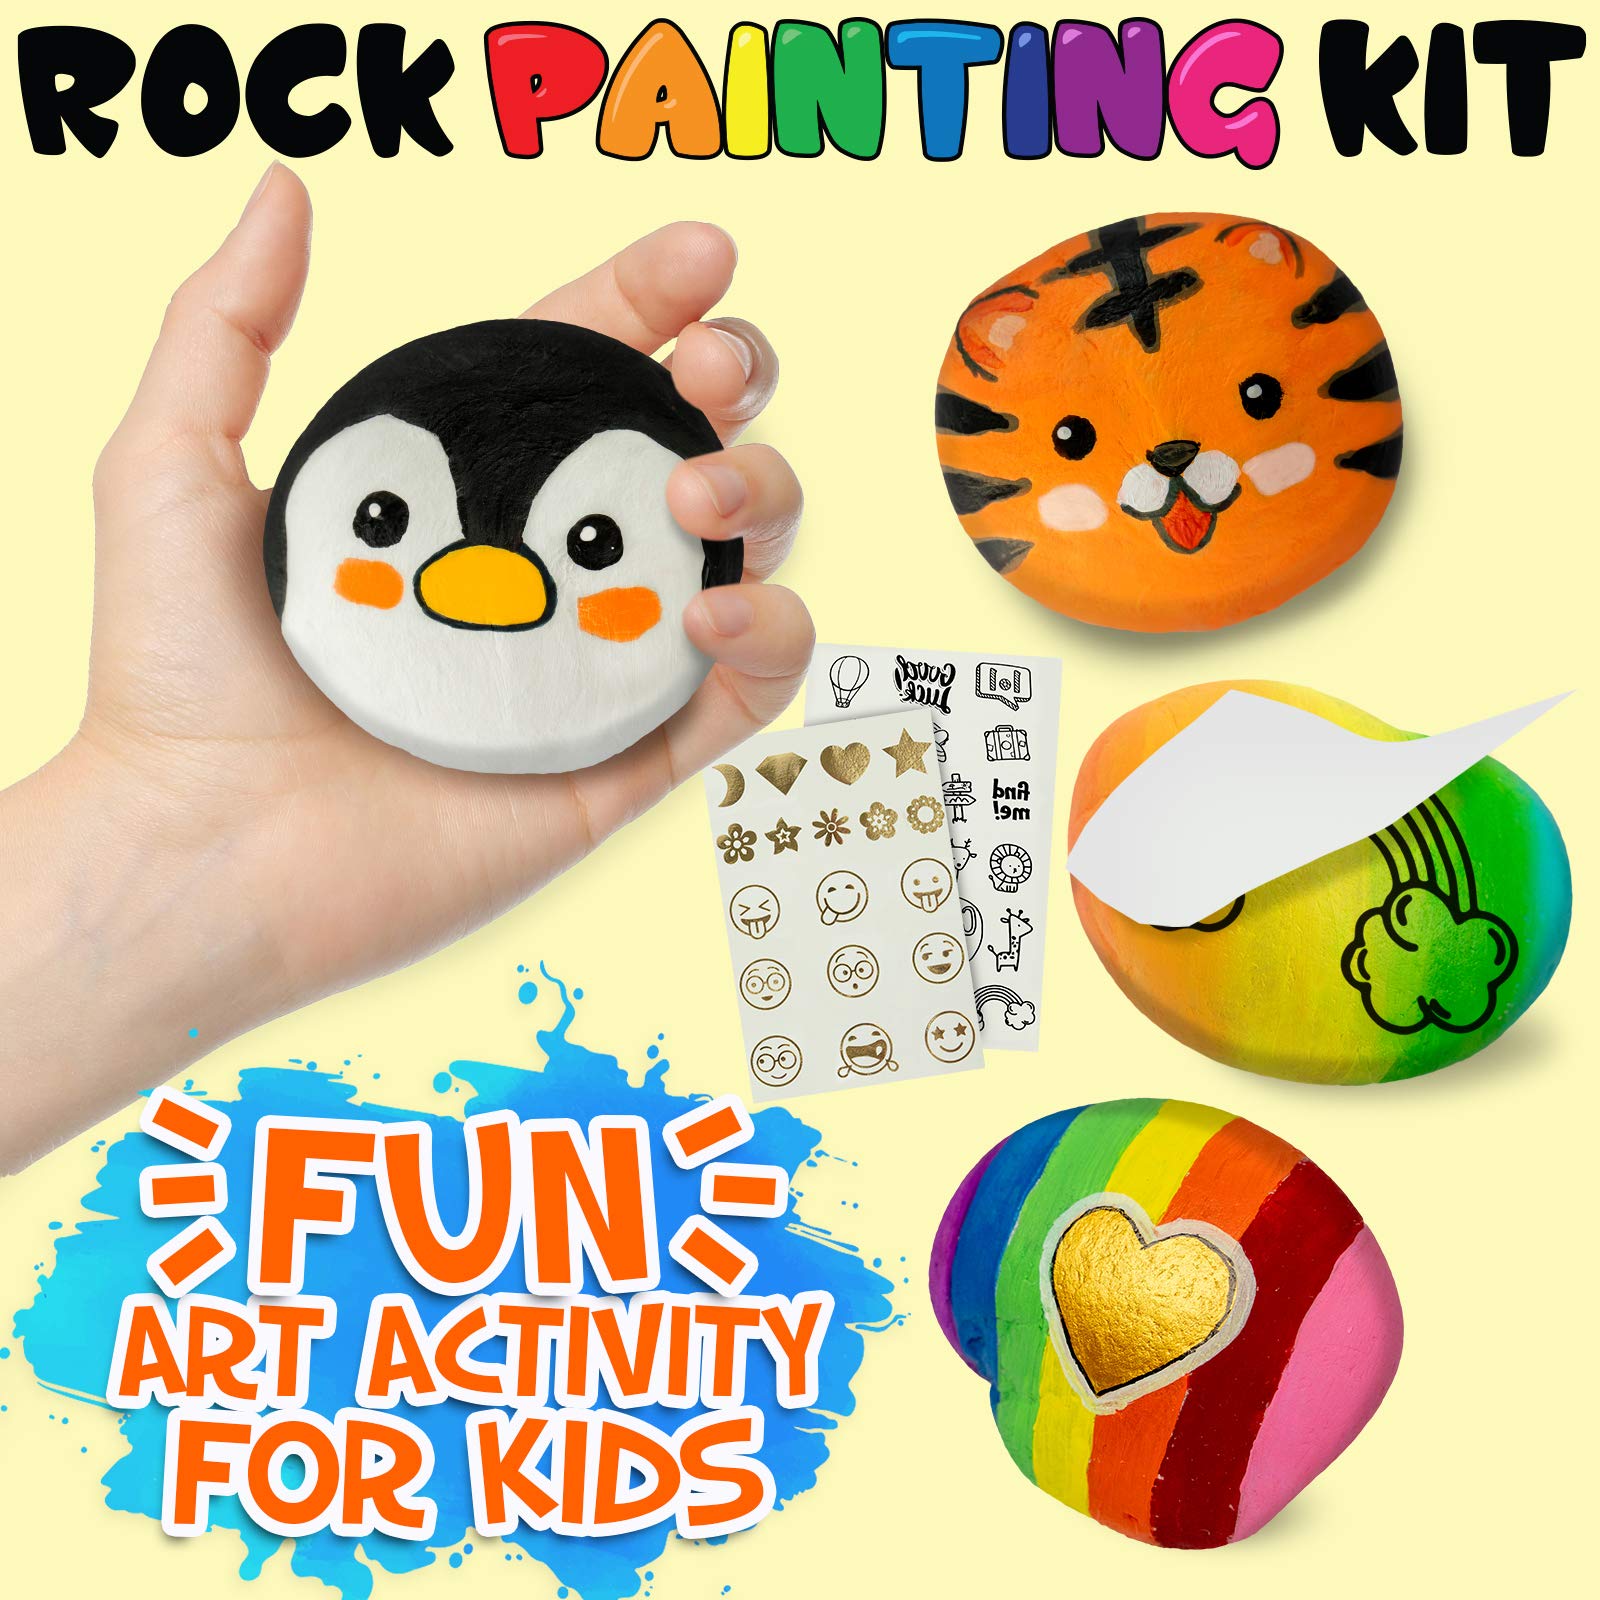 JOYEZA Deluxe Rock Painting Kit, Arts and Crafts for Girls Boys Age 6+ , 12 Rocks, Best Tween Gift Art Set, Waterproof Paints, All-inclusive Craft Kits Art Supplies, Kids Activities Age 4 5 6 7 8 9 10